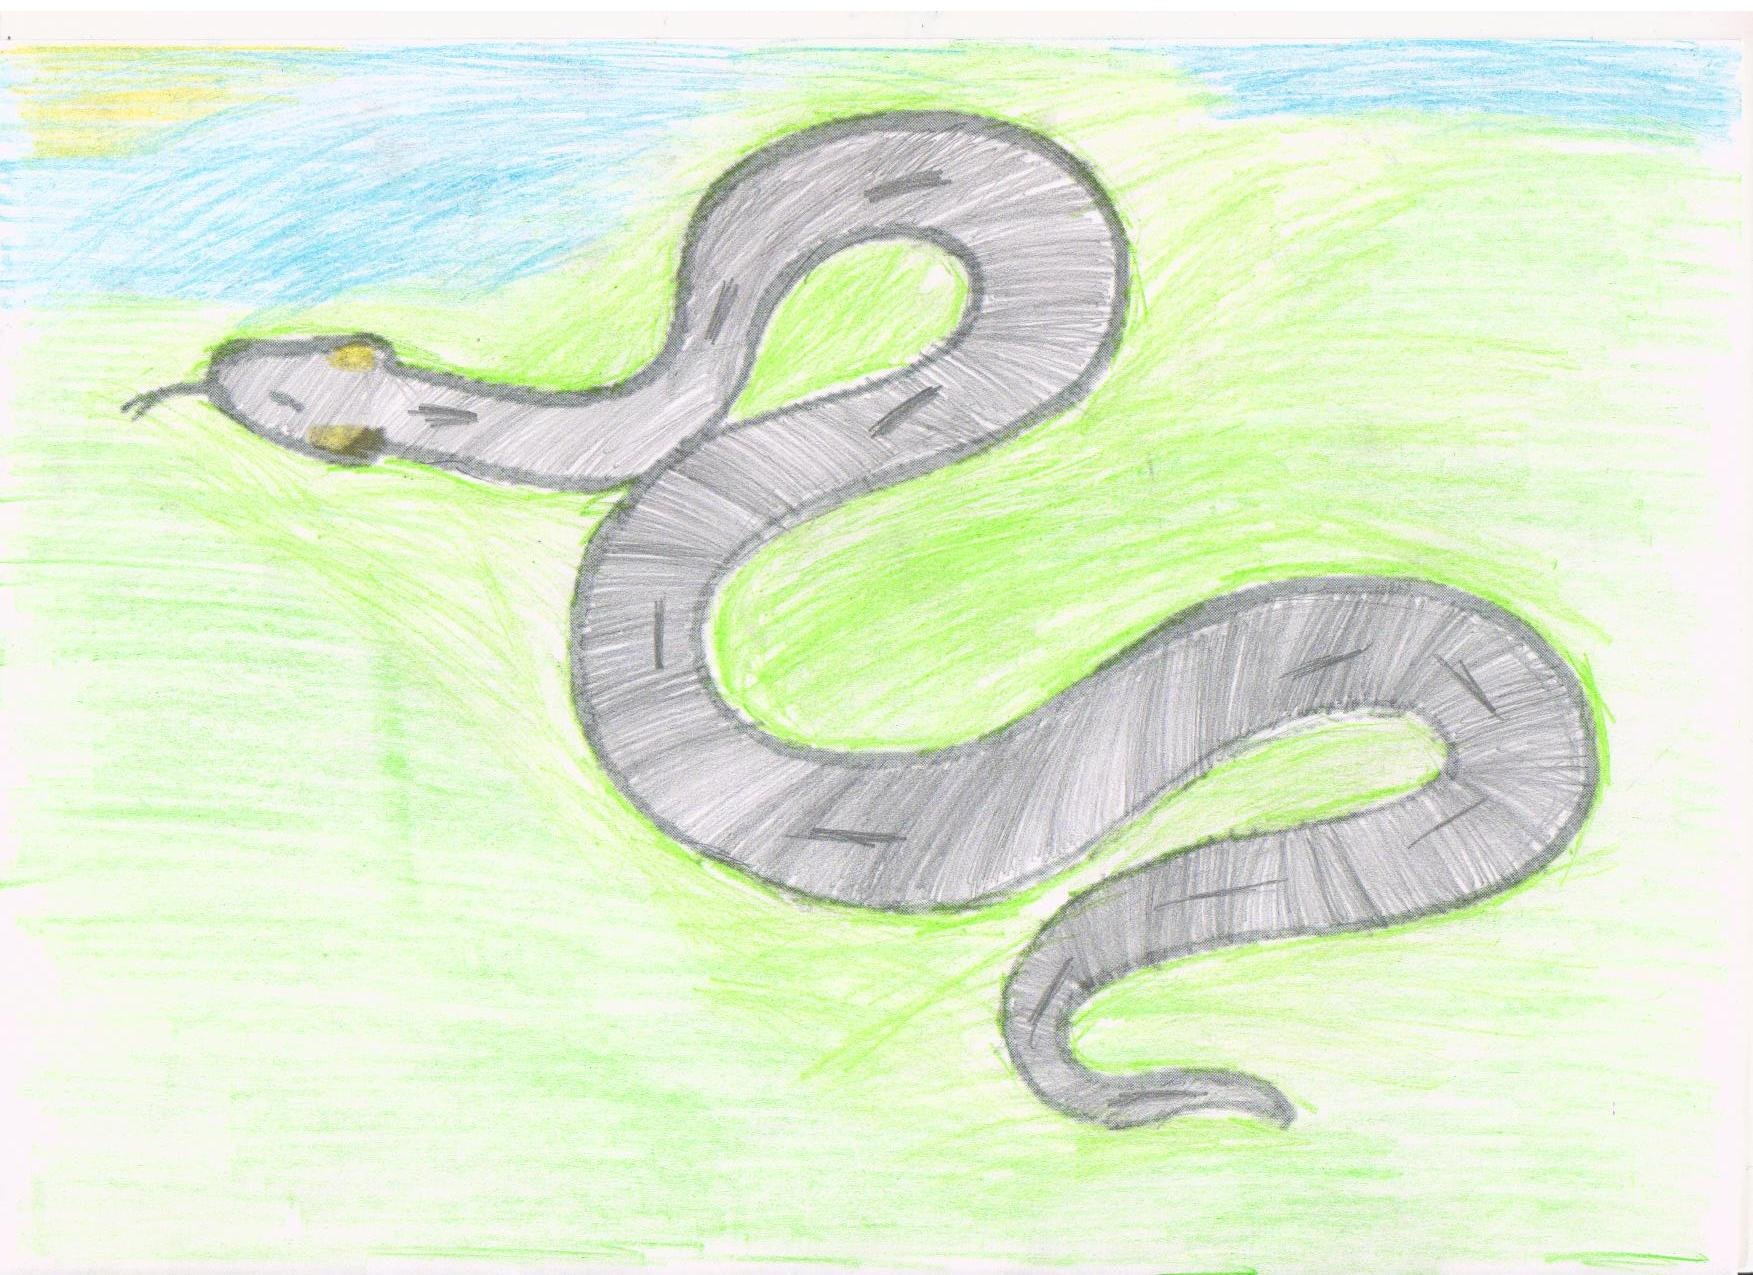 Картинки змеи для срисовки